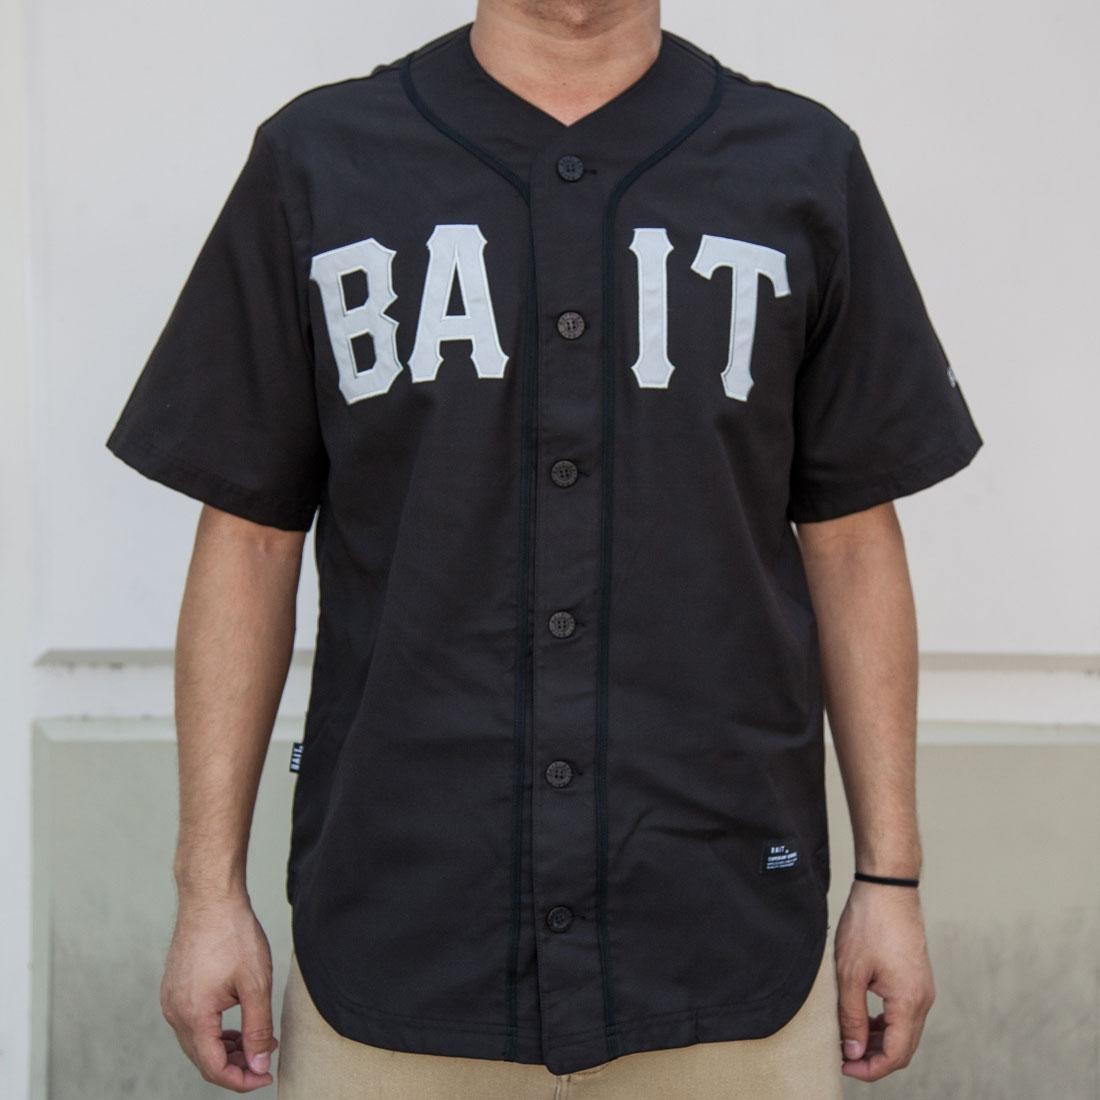 grey and black baseball jersey